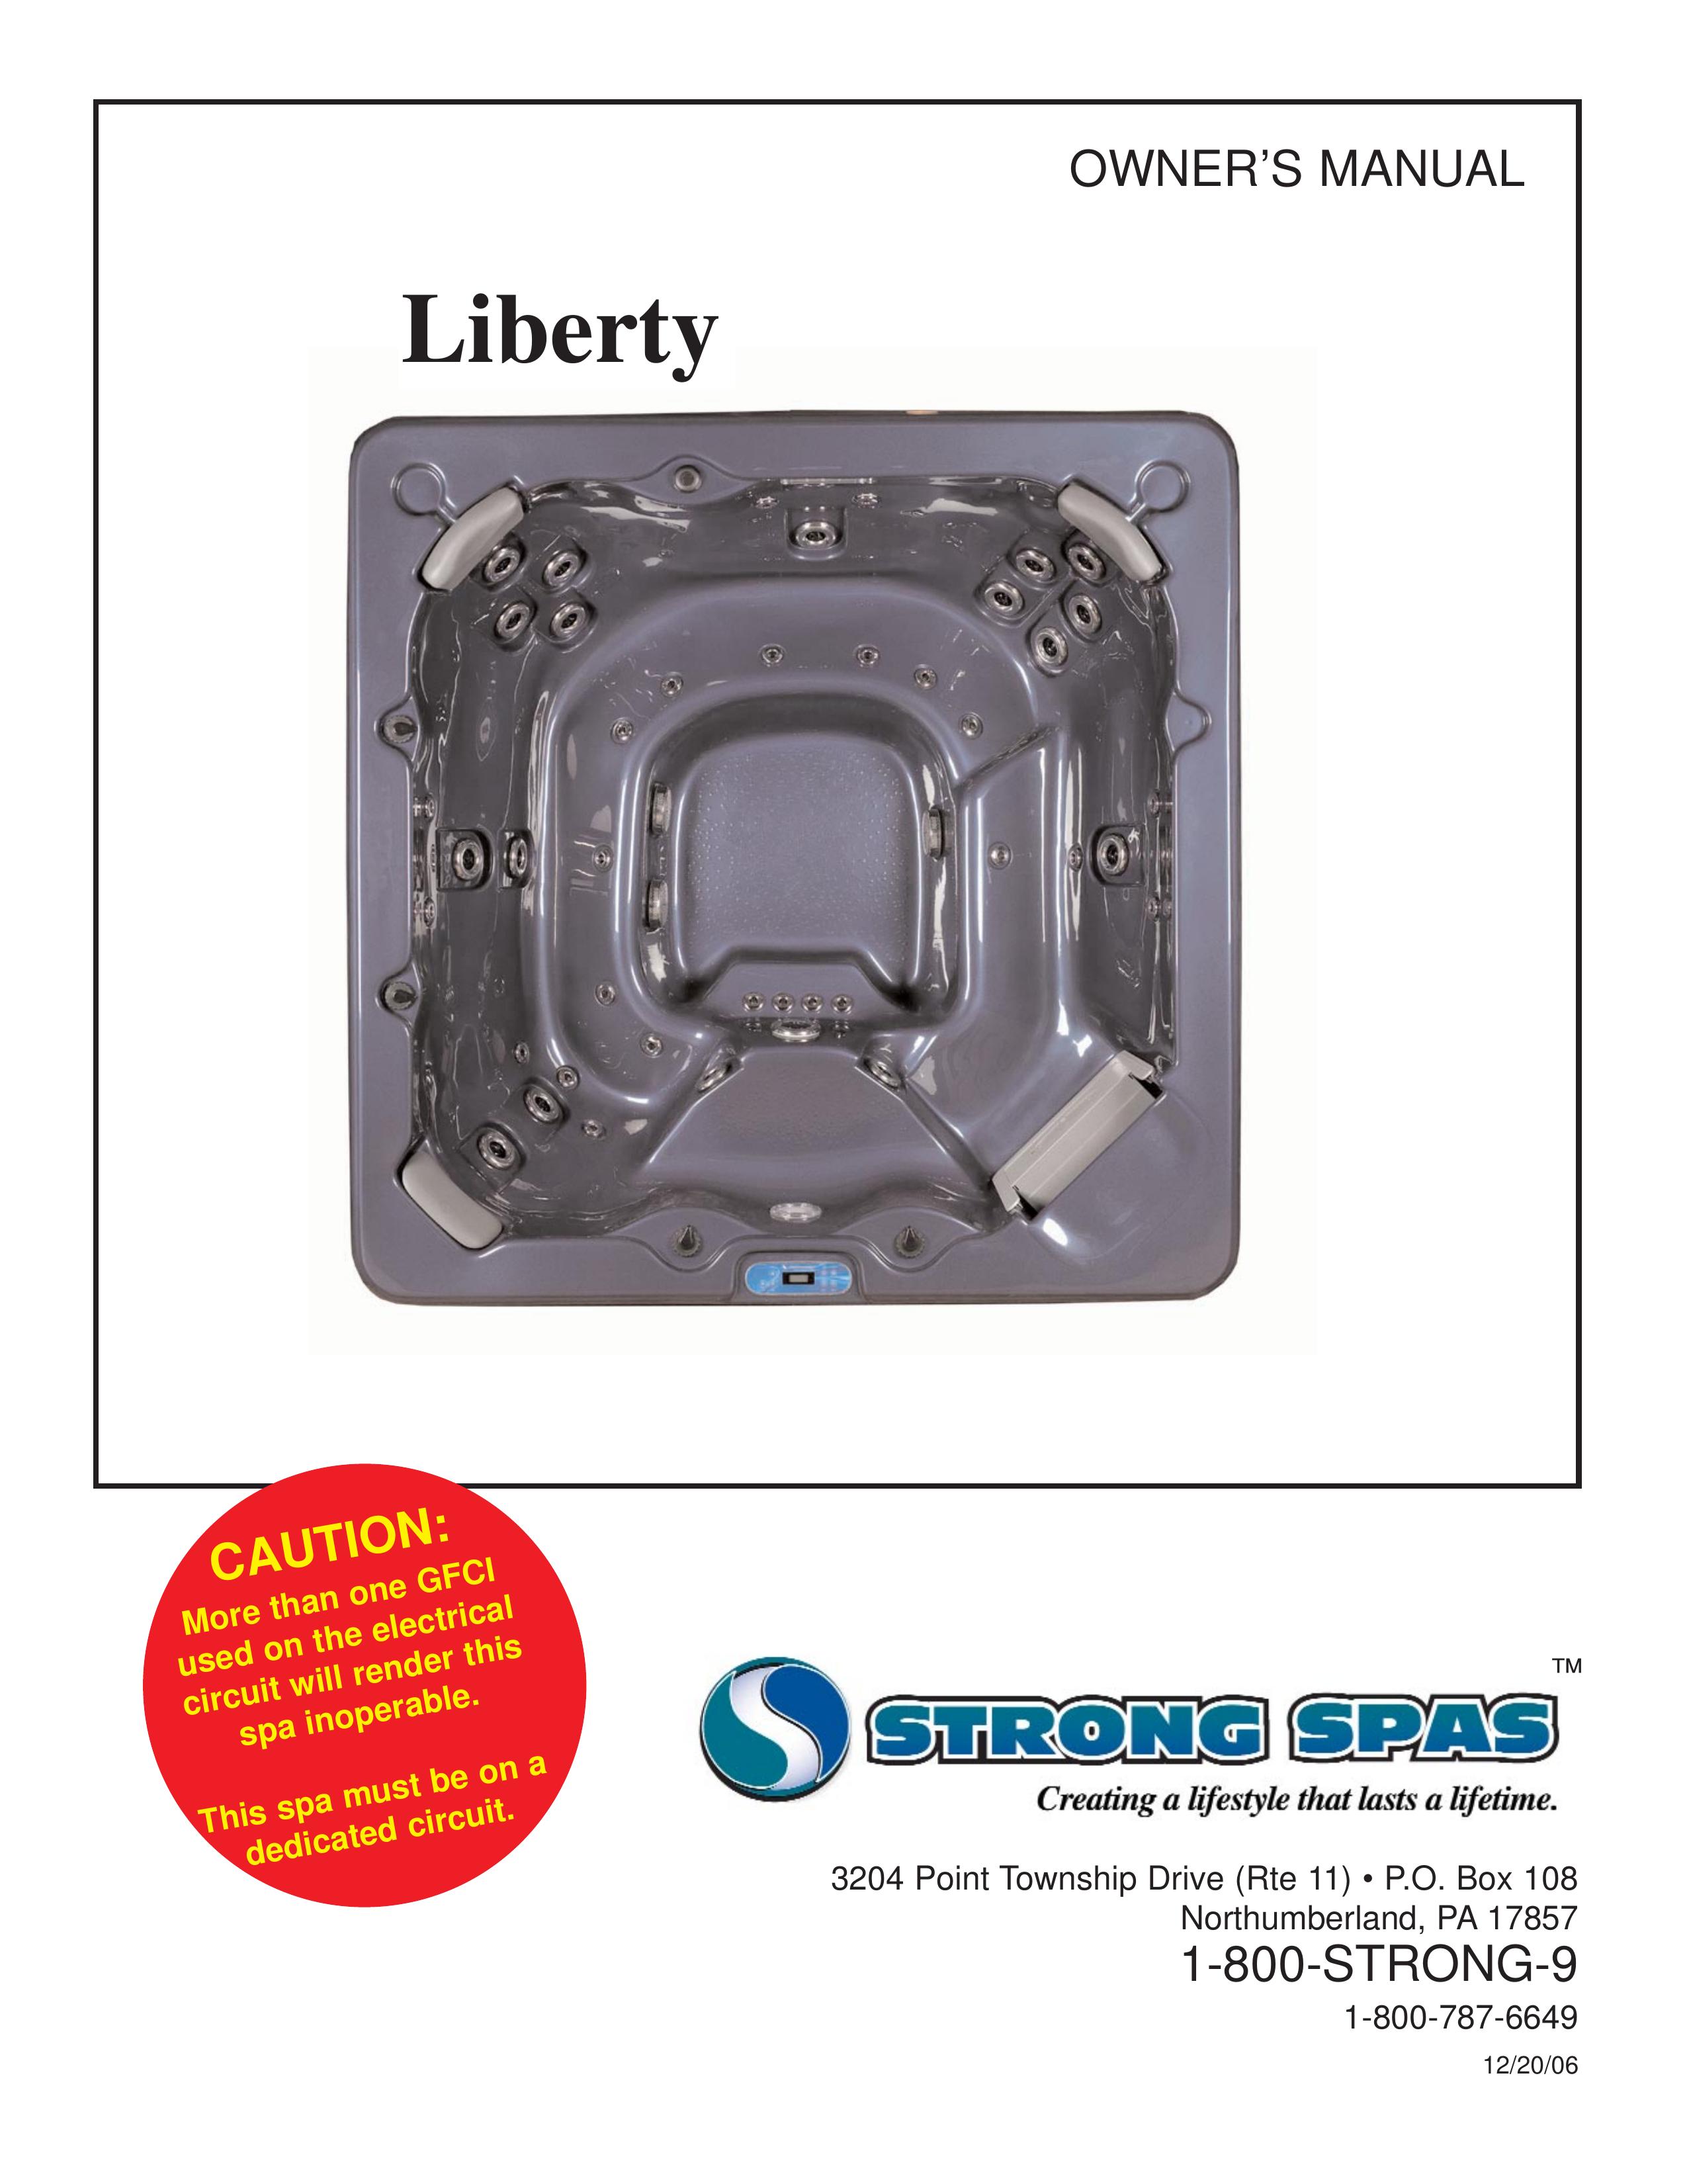 Strong Pools and Spas Liberty Hot Tub User Manual